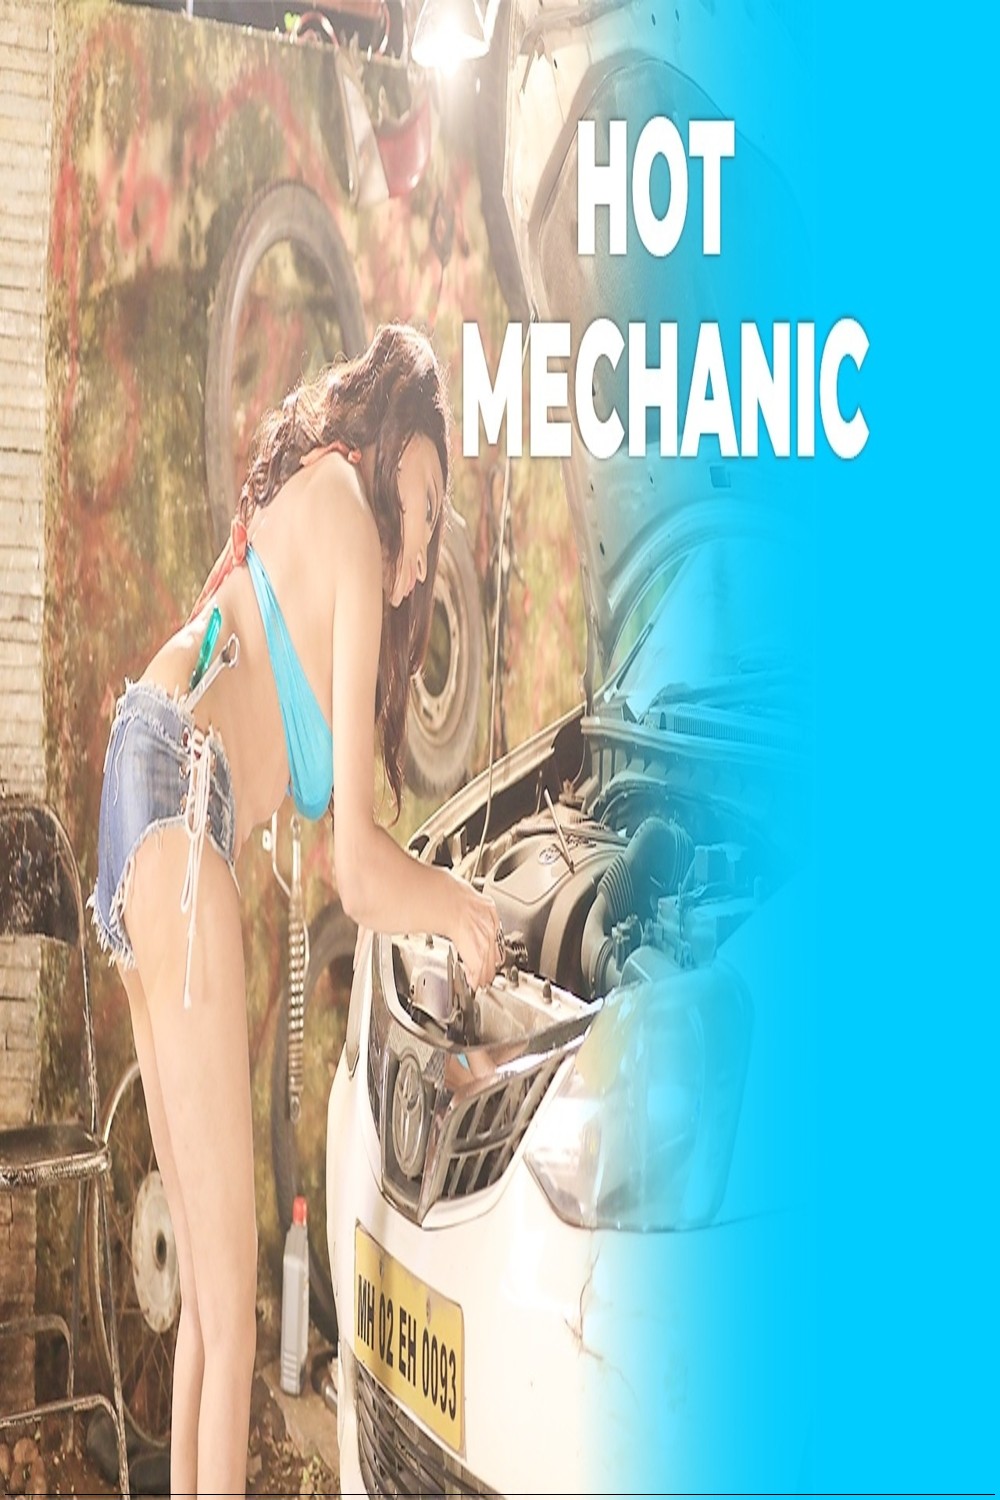 18+ Hot Mechanic By Sherlyn Chopra 2019 Hindi 720p HDRip free direct Download